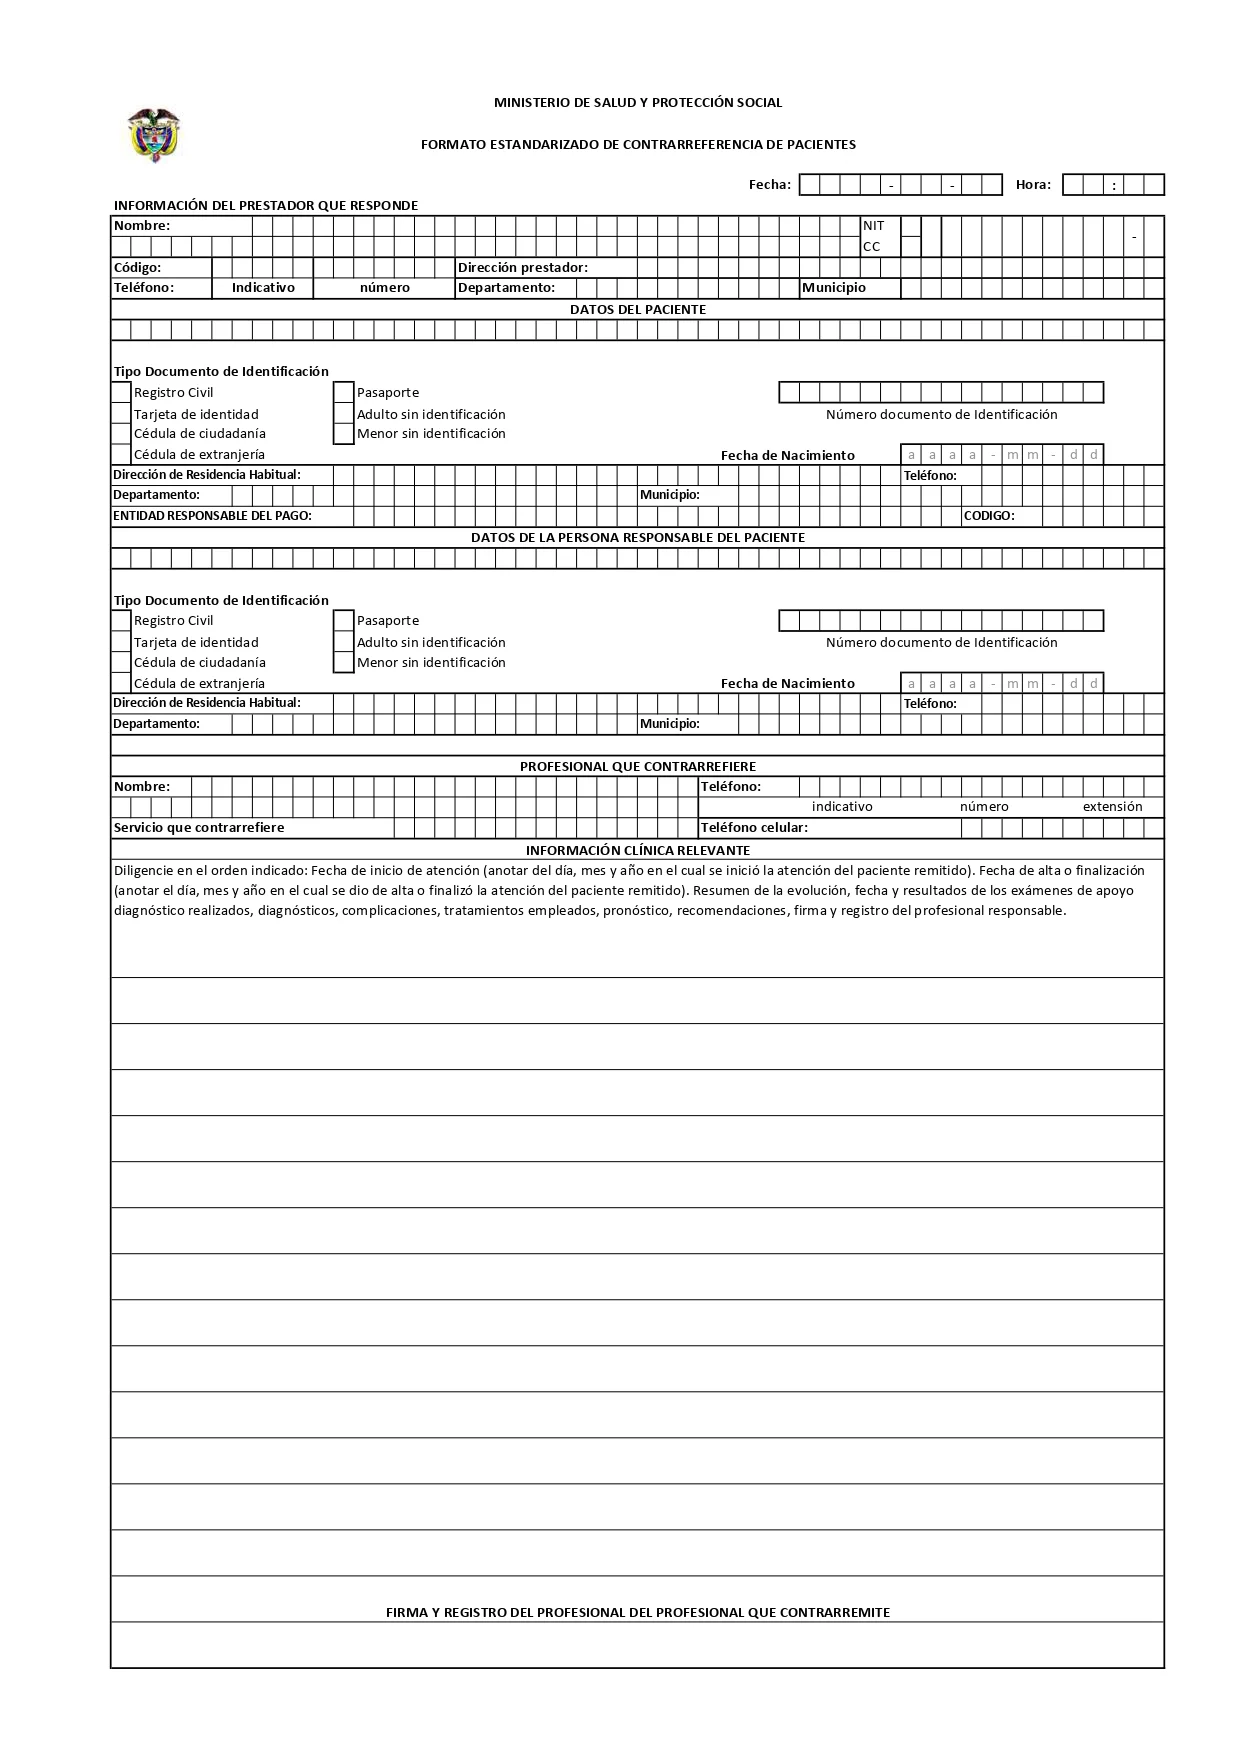 Anexo técnico 10 Resolución 4331 de 2012 Formato formato estandarizado de contrarreferencia de pacientes